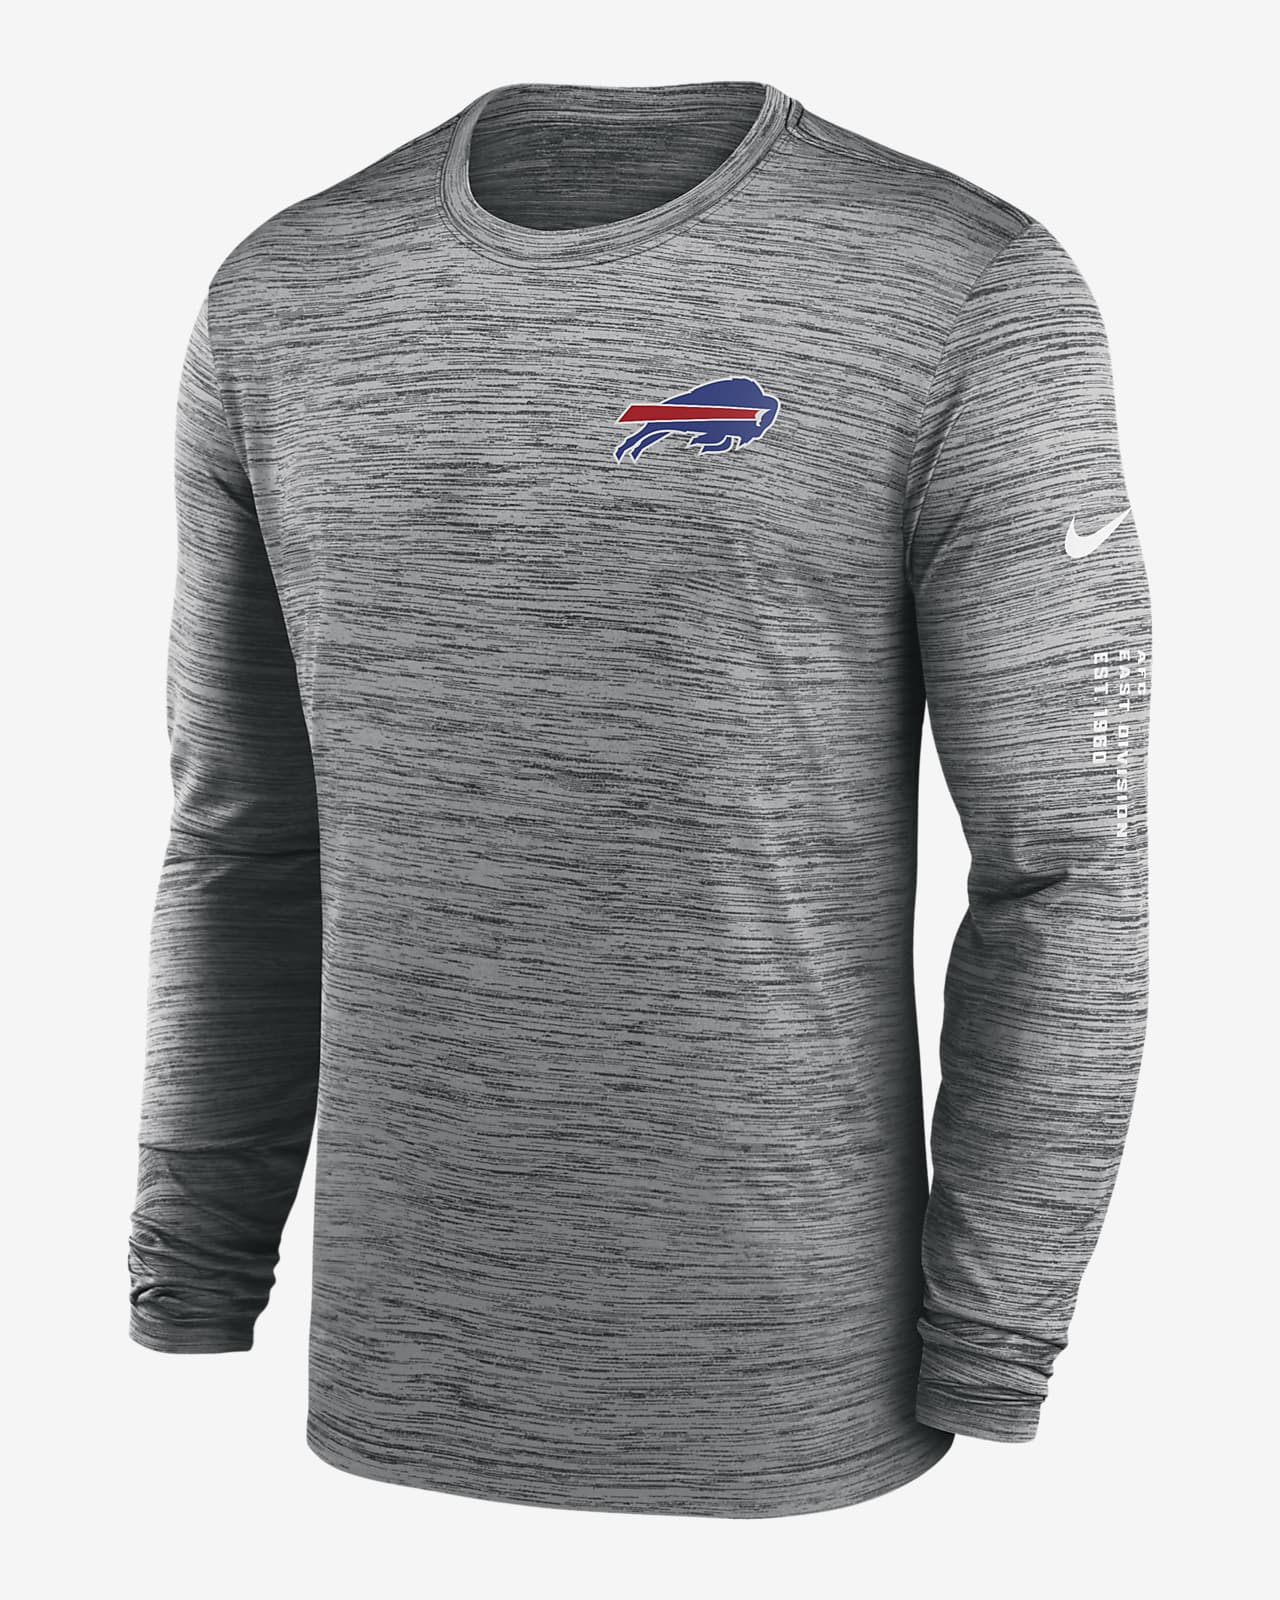 NFL Men's T-Shirt - Black - XL